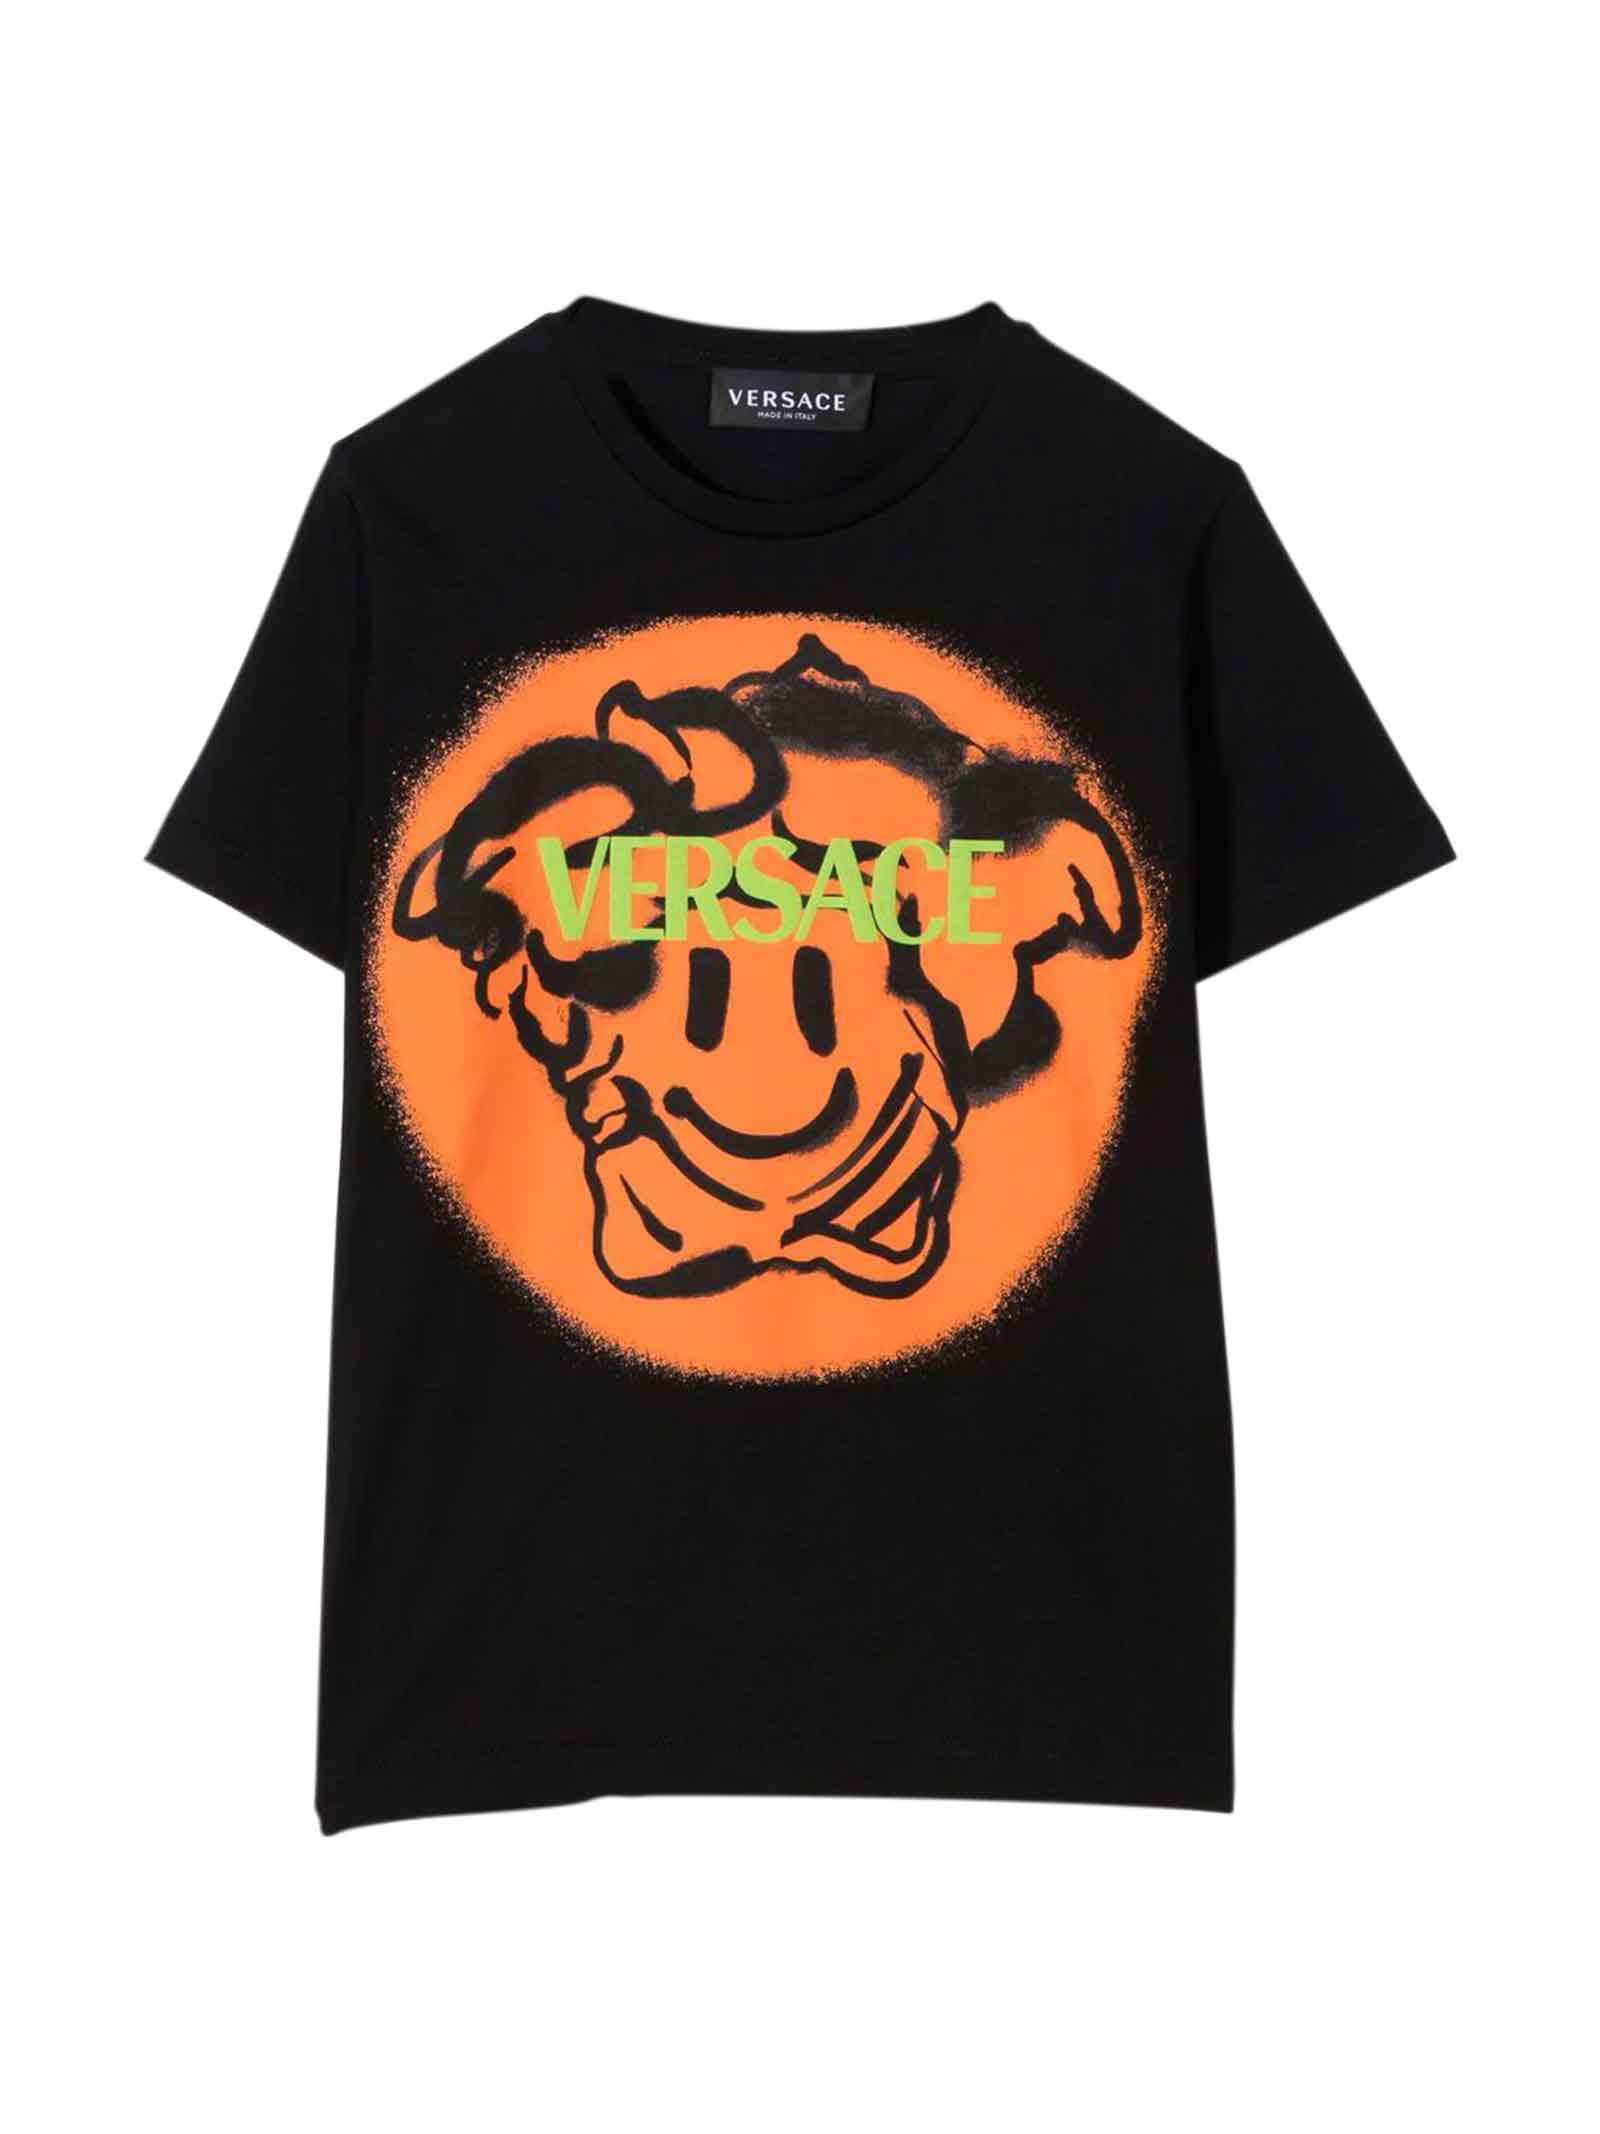 Versace Black T-shirt With Orange Print Kids